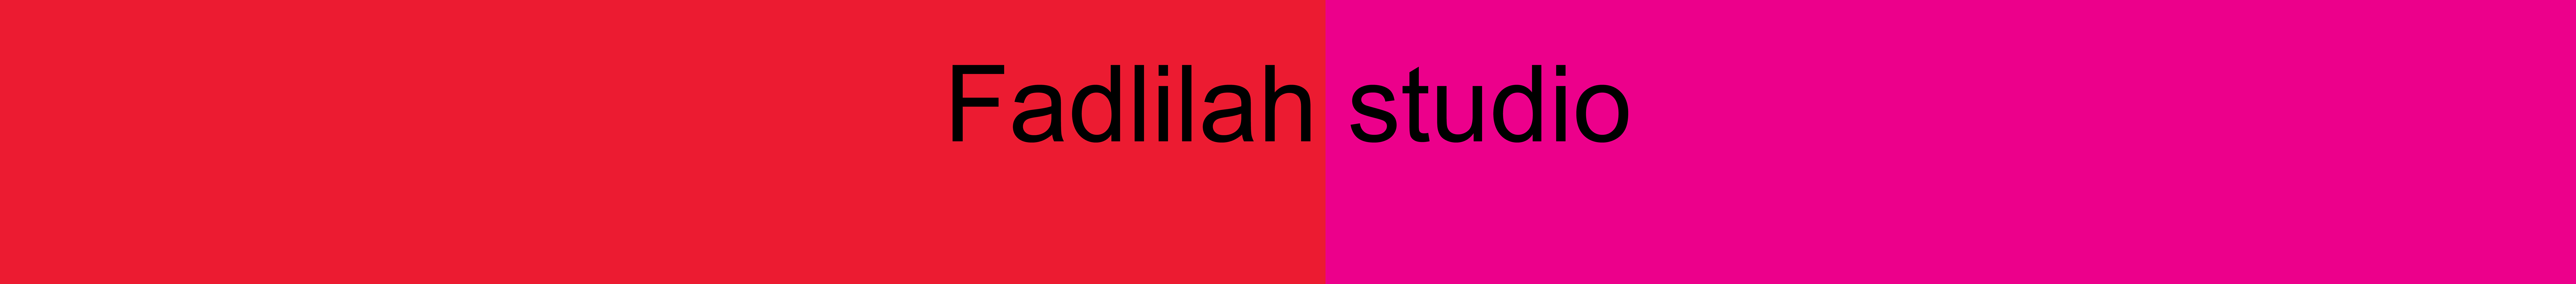 Fina Fadlilah's profile banner